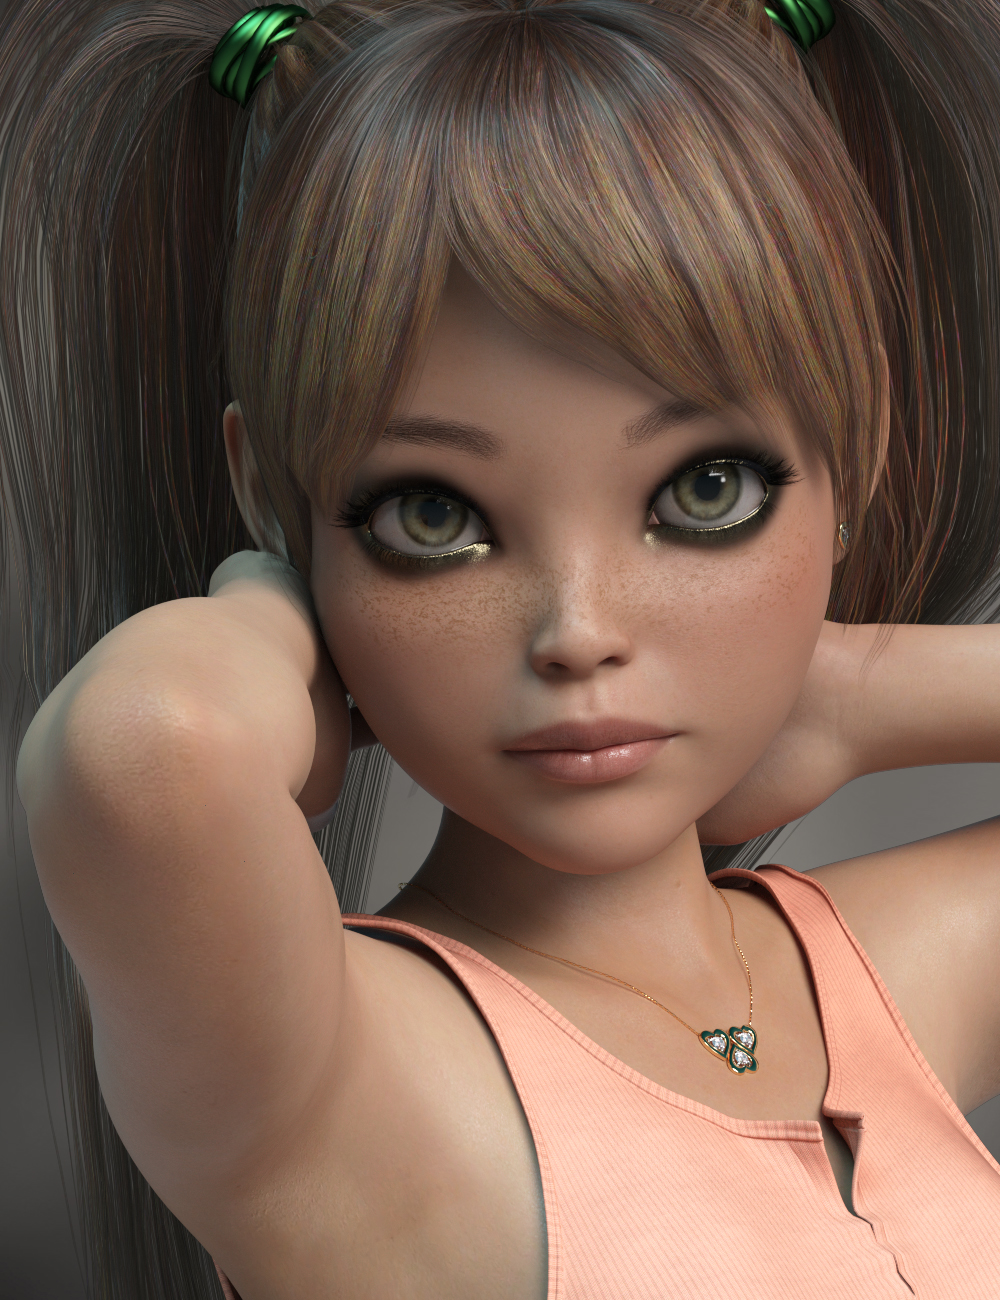 P3D Misty HD for Genesis 8 Female by: P3Design, 3D Models by Daz 3D